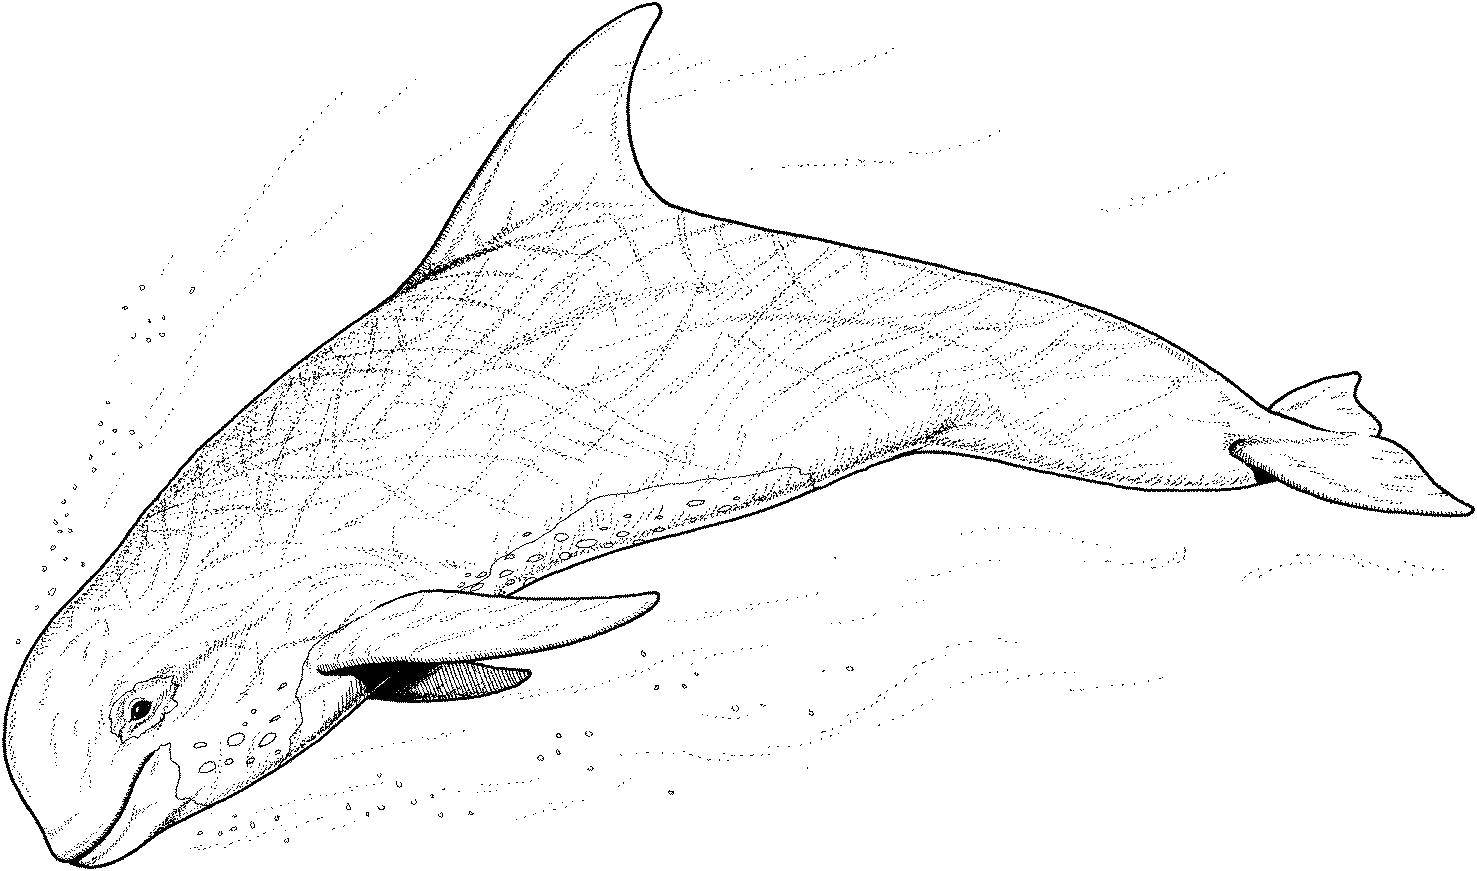 Coloring Peaceful Beluga. Category marine. Tags:  Underwater world, fish.